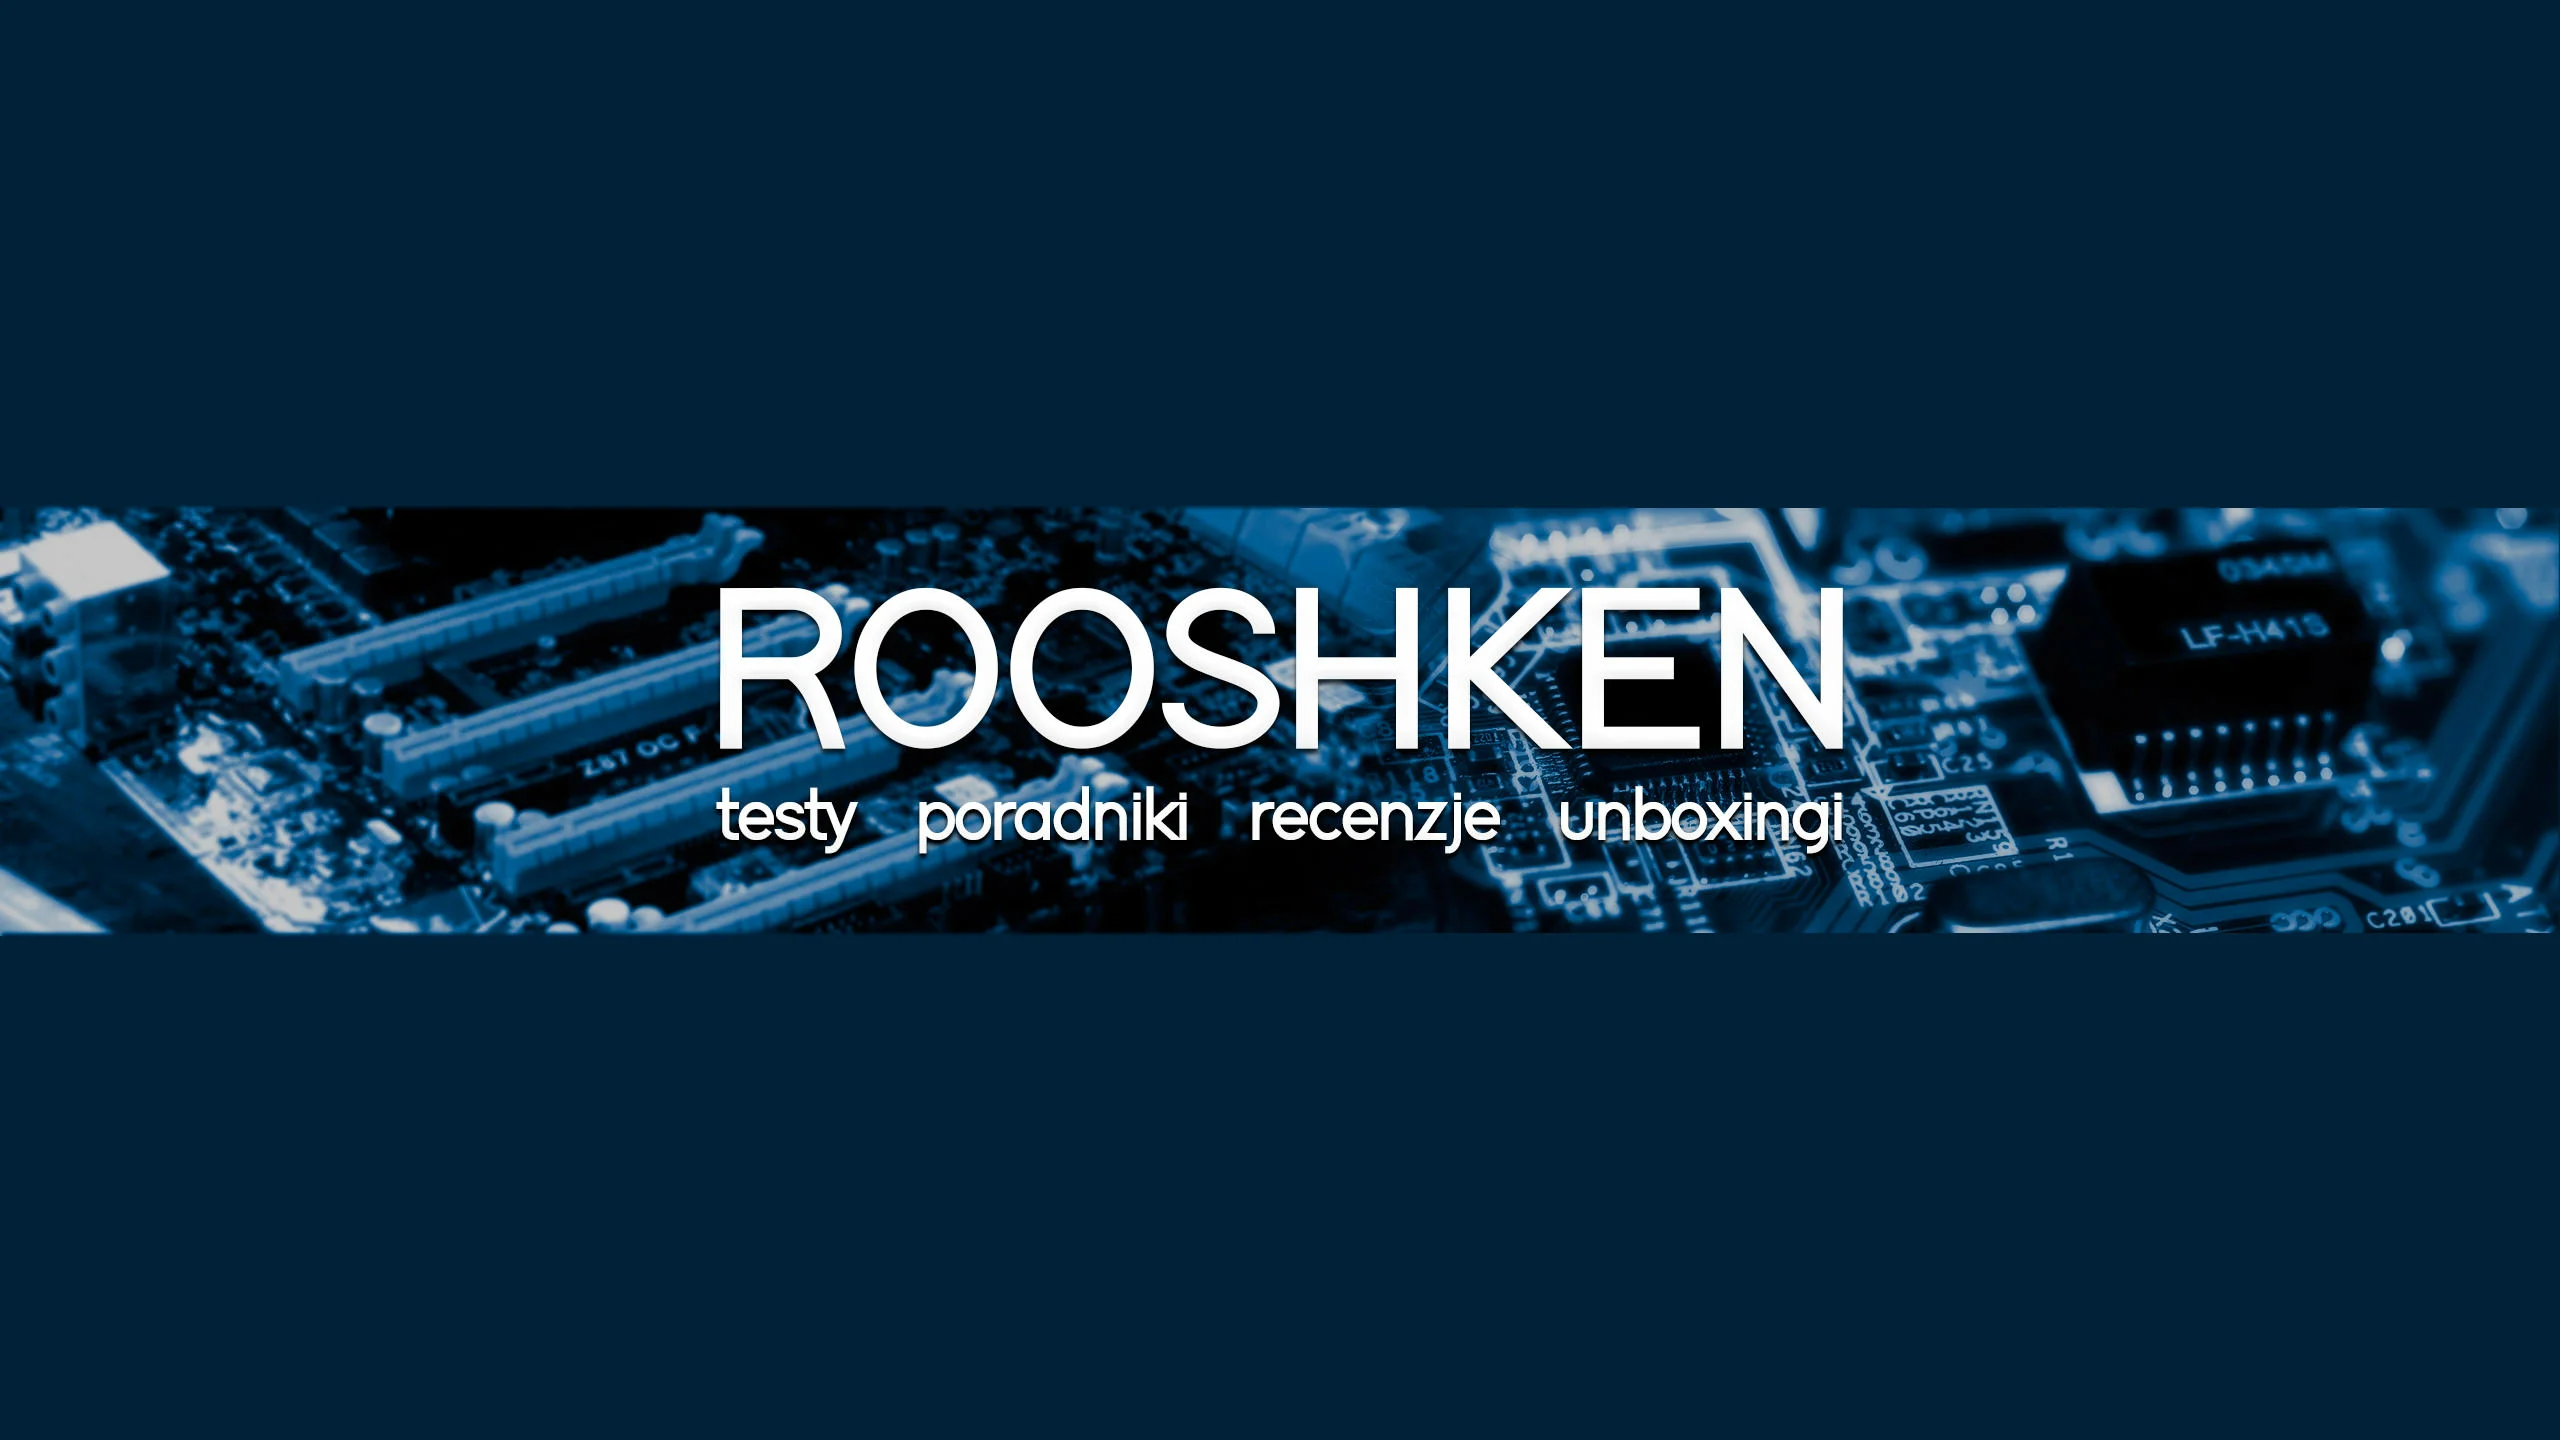 Rooshken logo